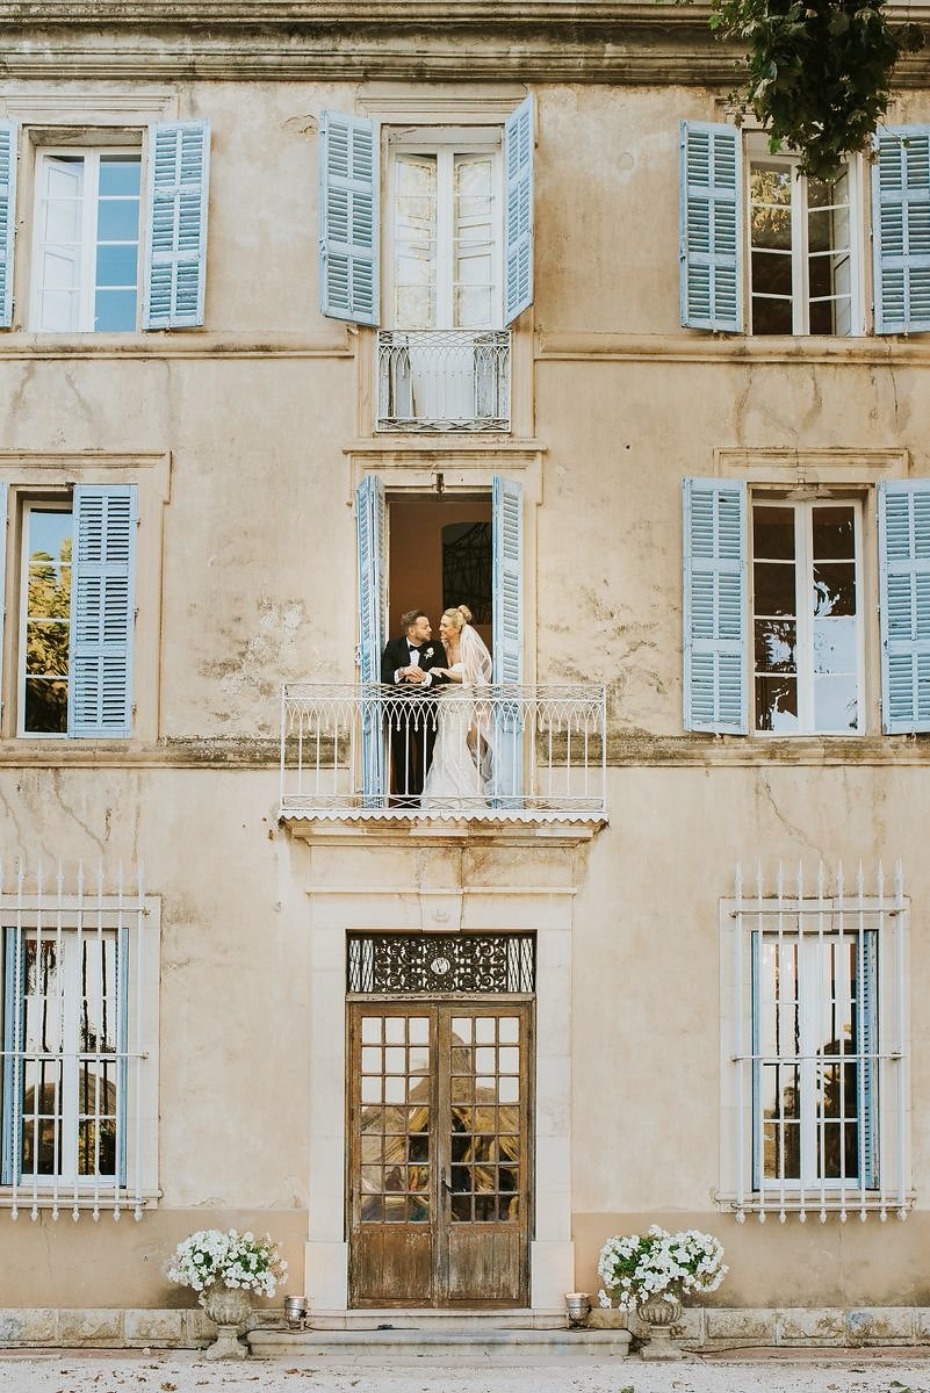 Chateau de Robernier wedding venue